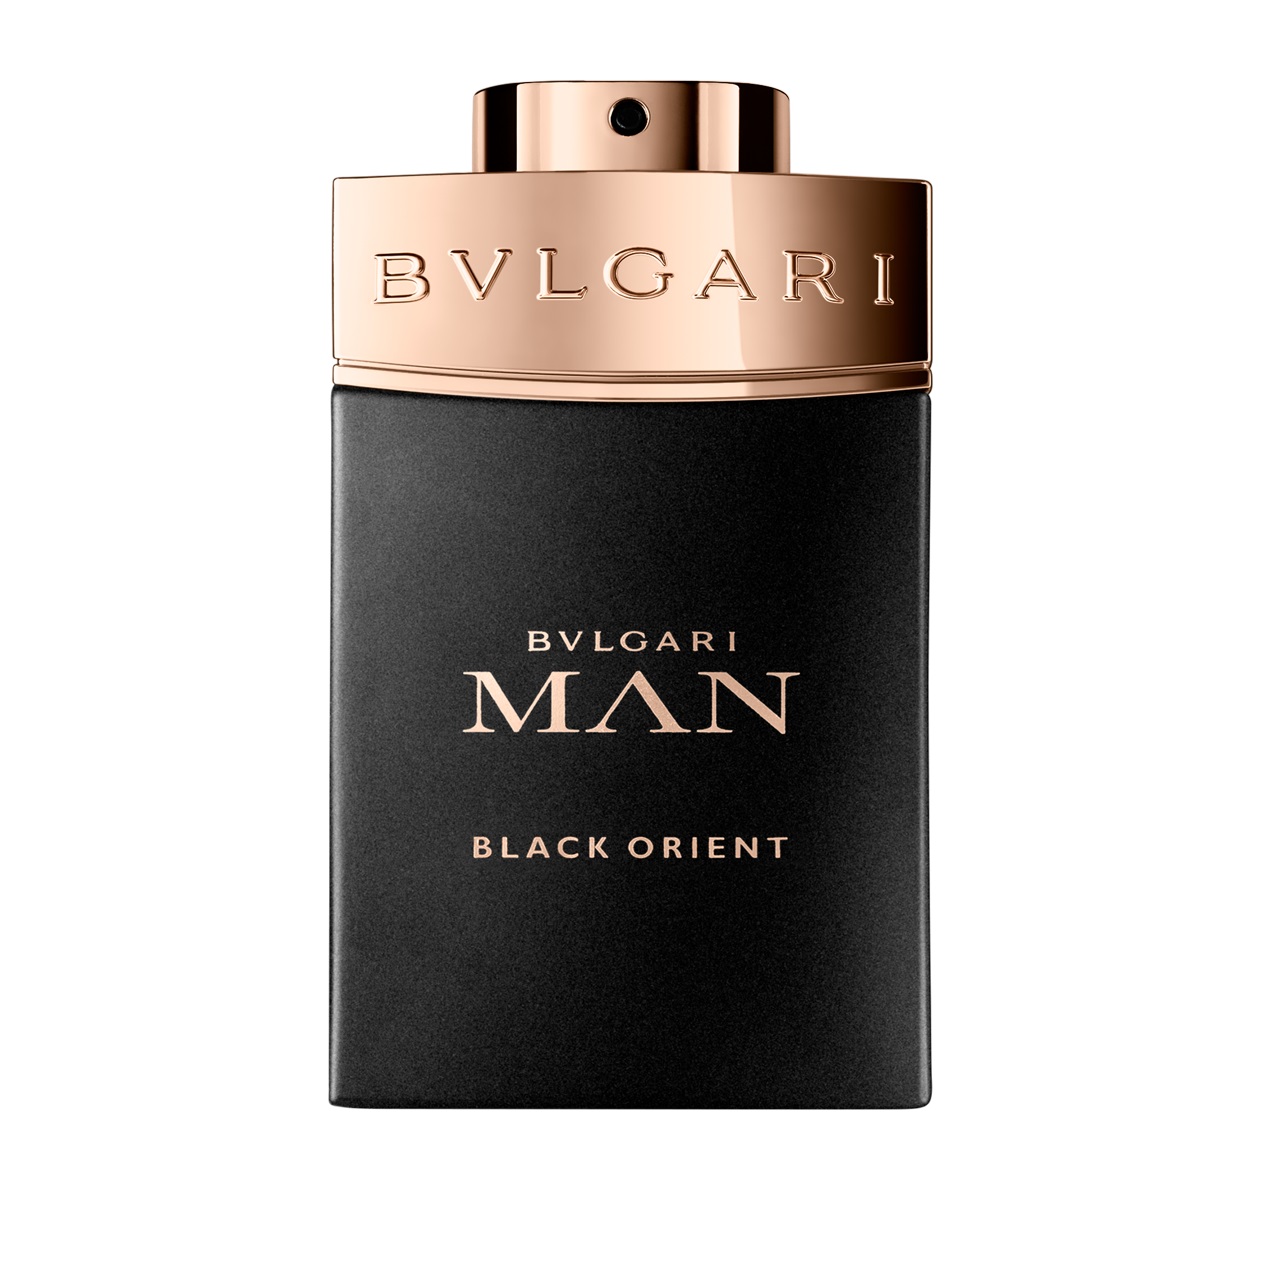 920-bvlgari-man-black-orient